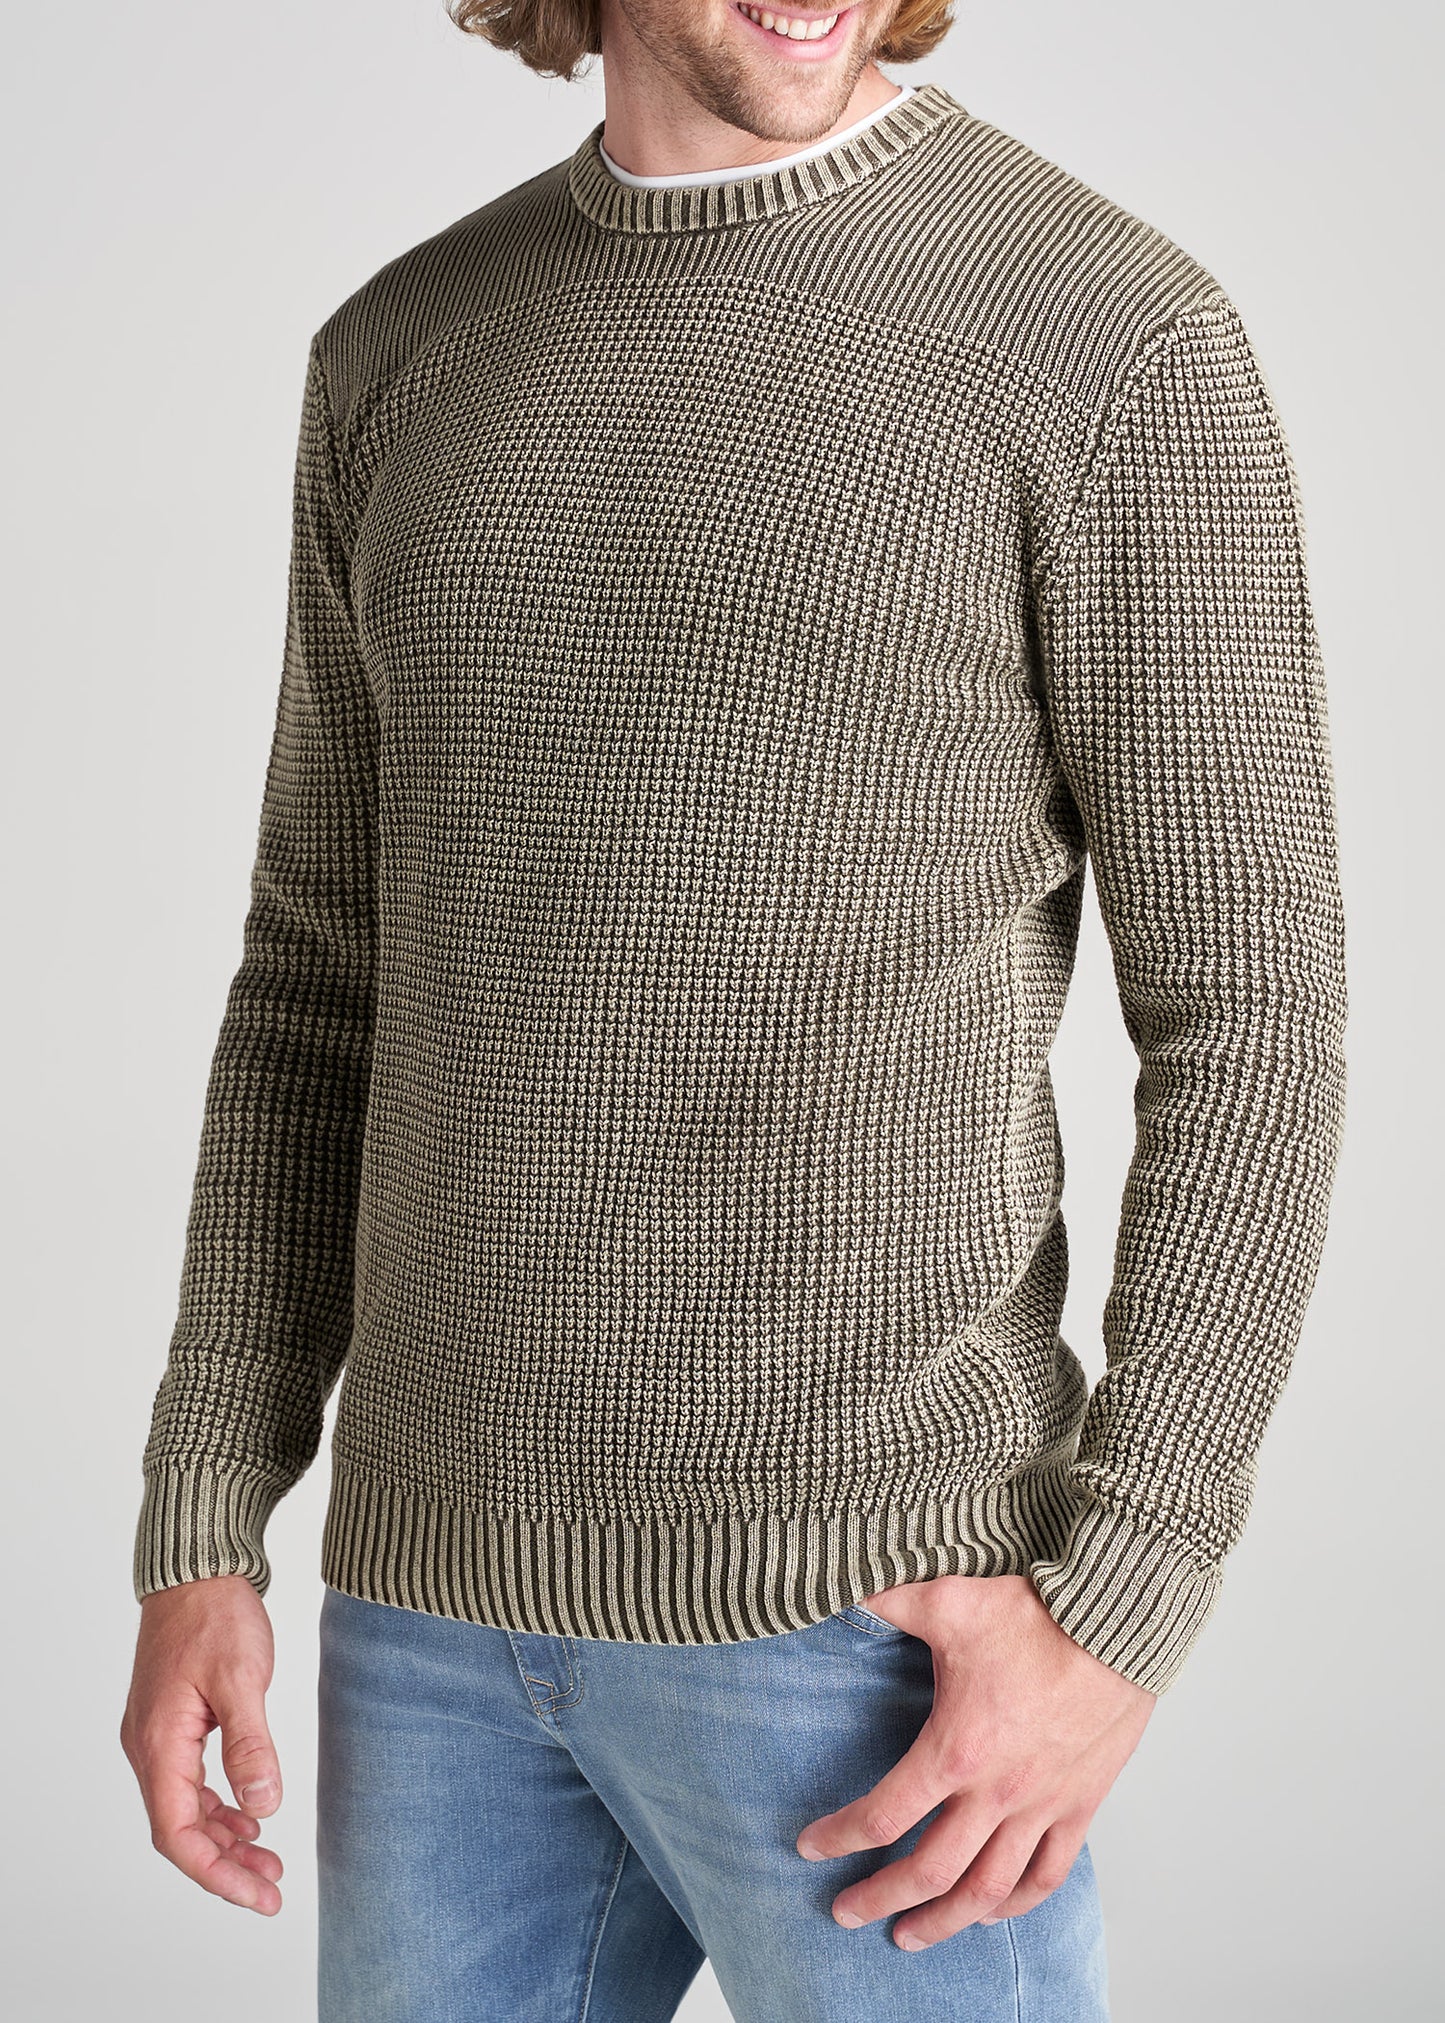 American-Tall-Men-LJ-AcidWash-Sweater-VintageSurplusGreen-front